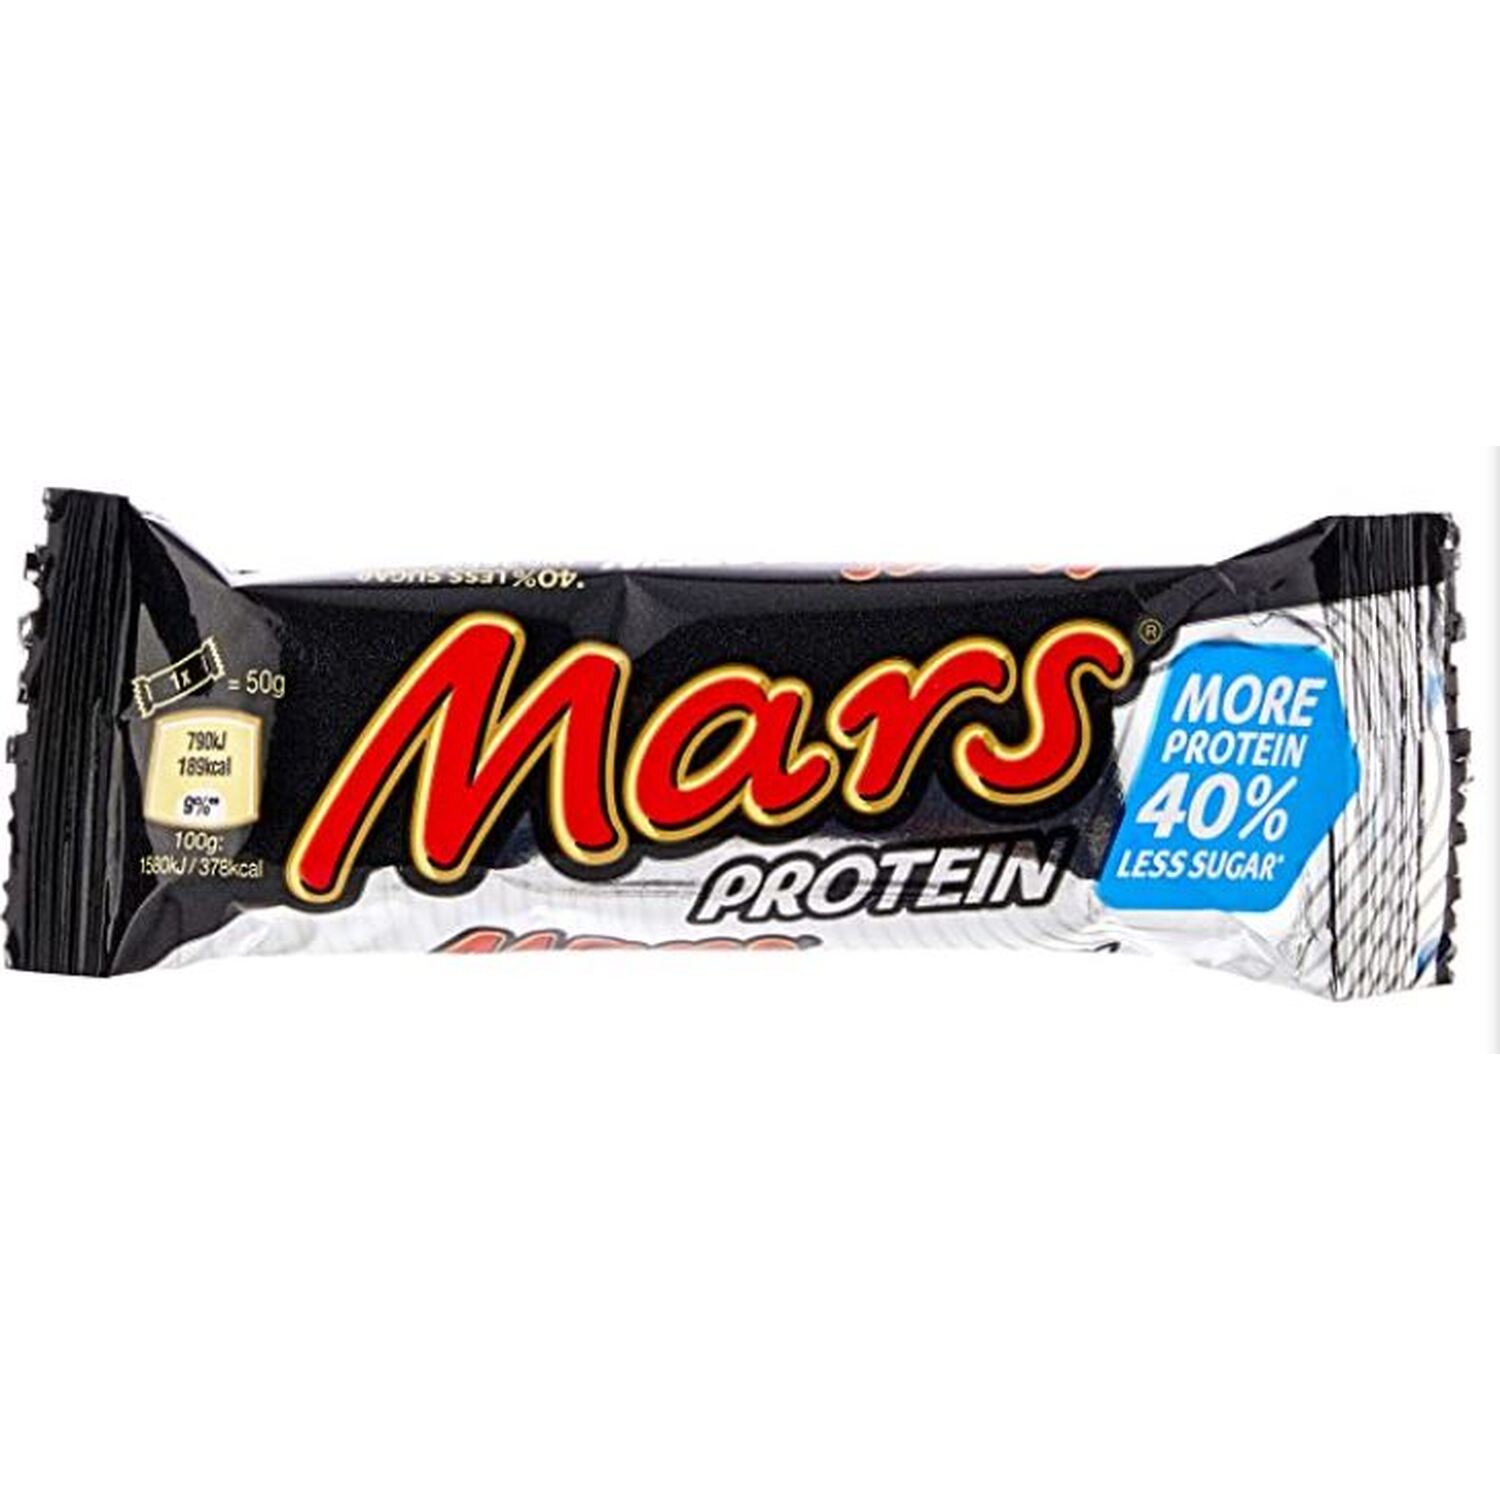 Mars Protein Bar Image